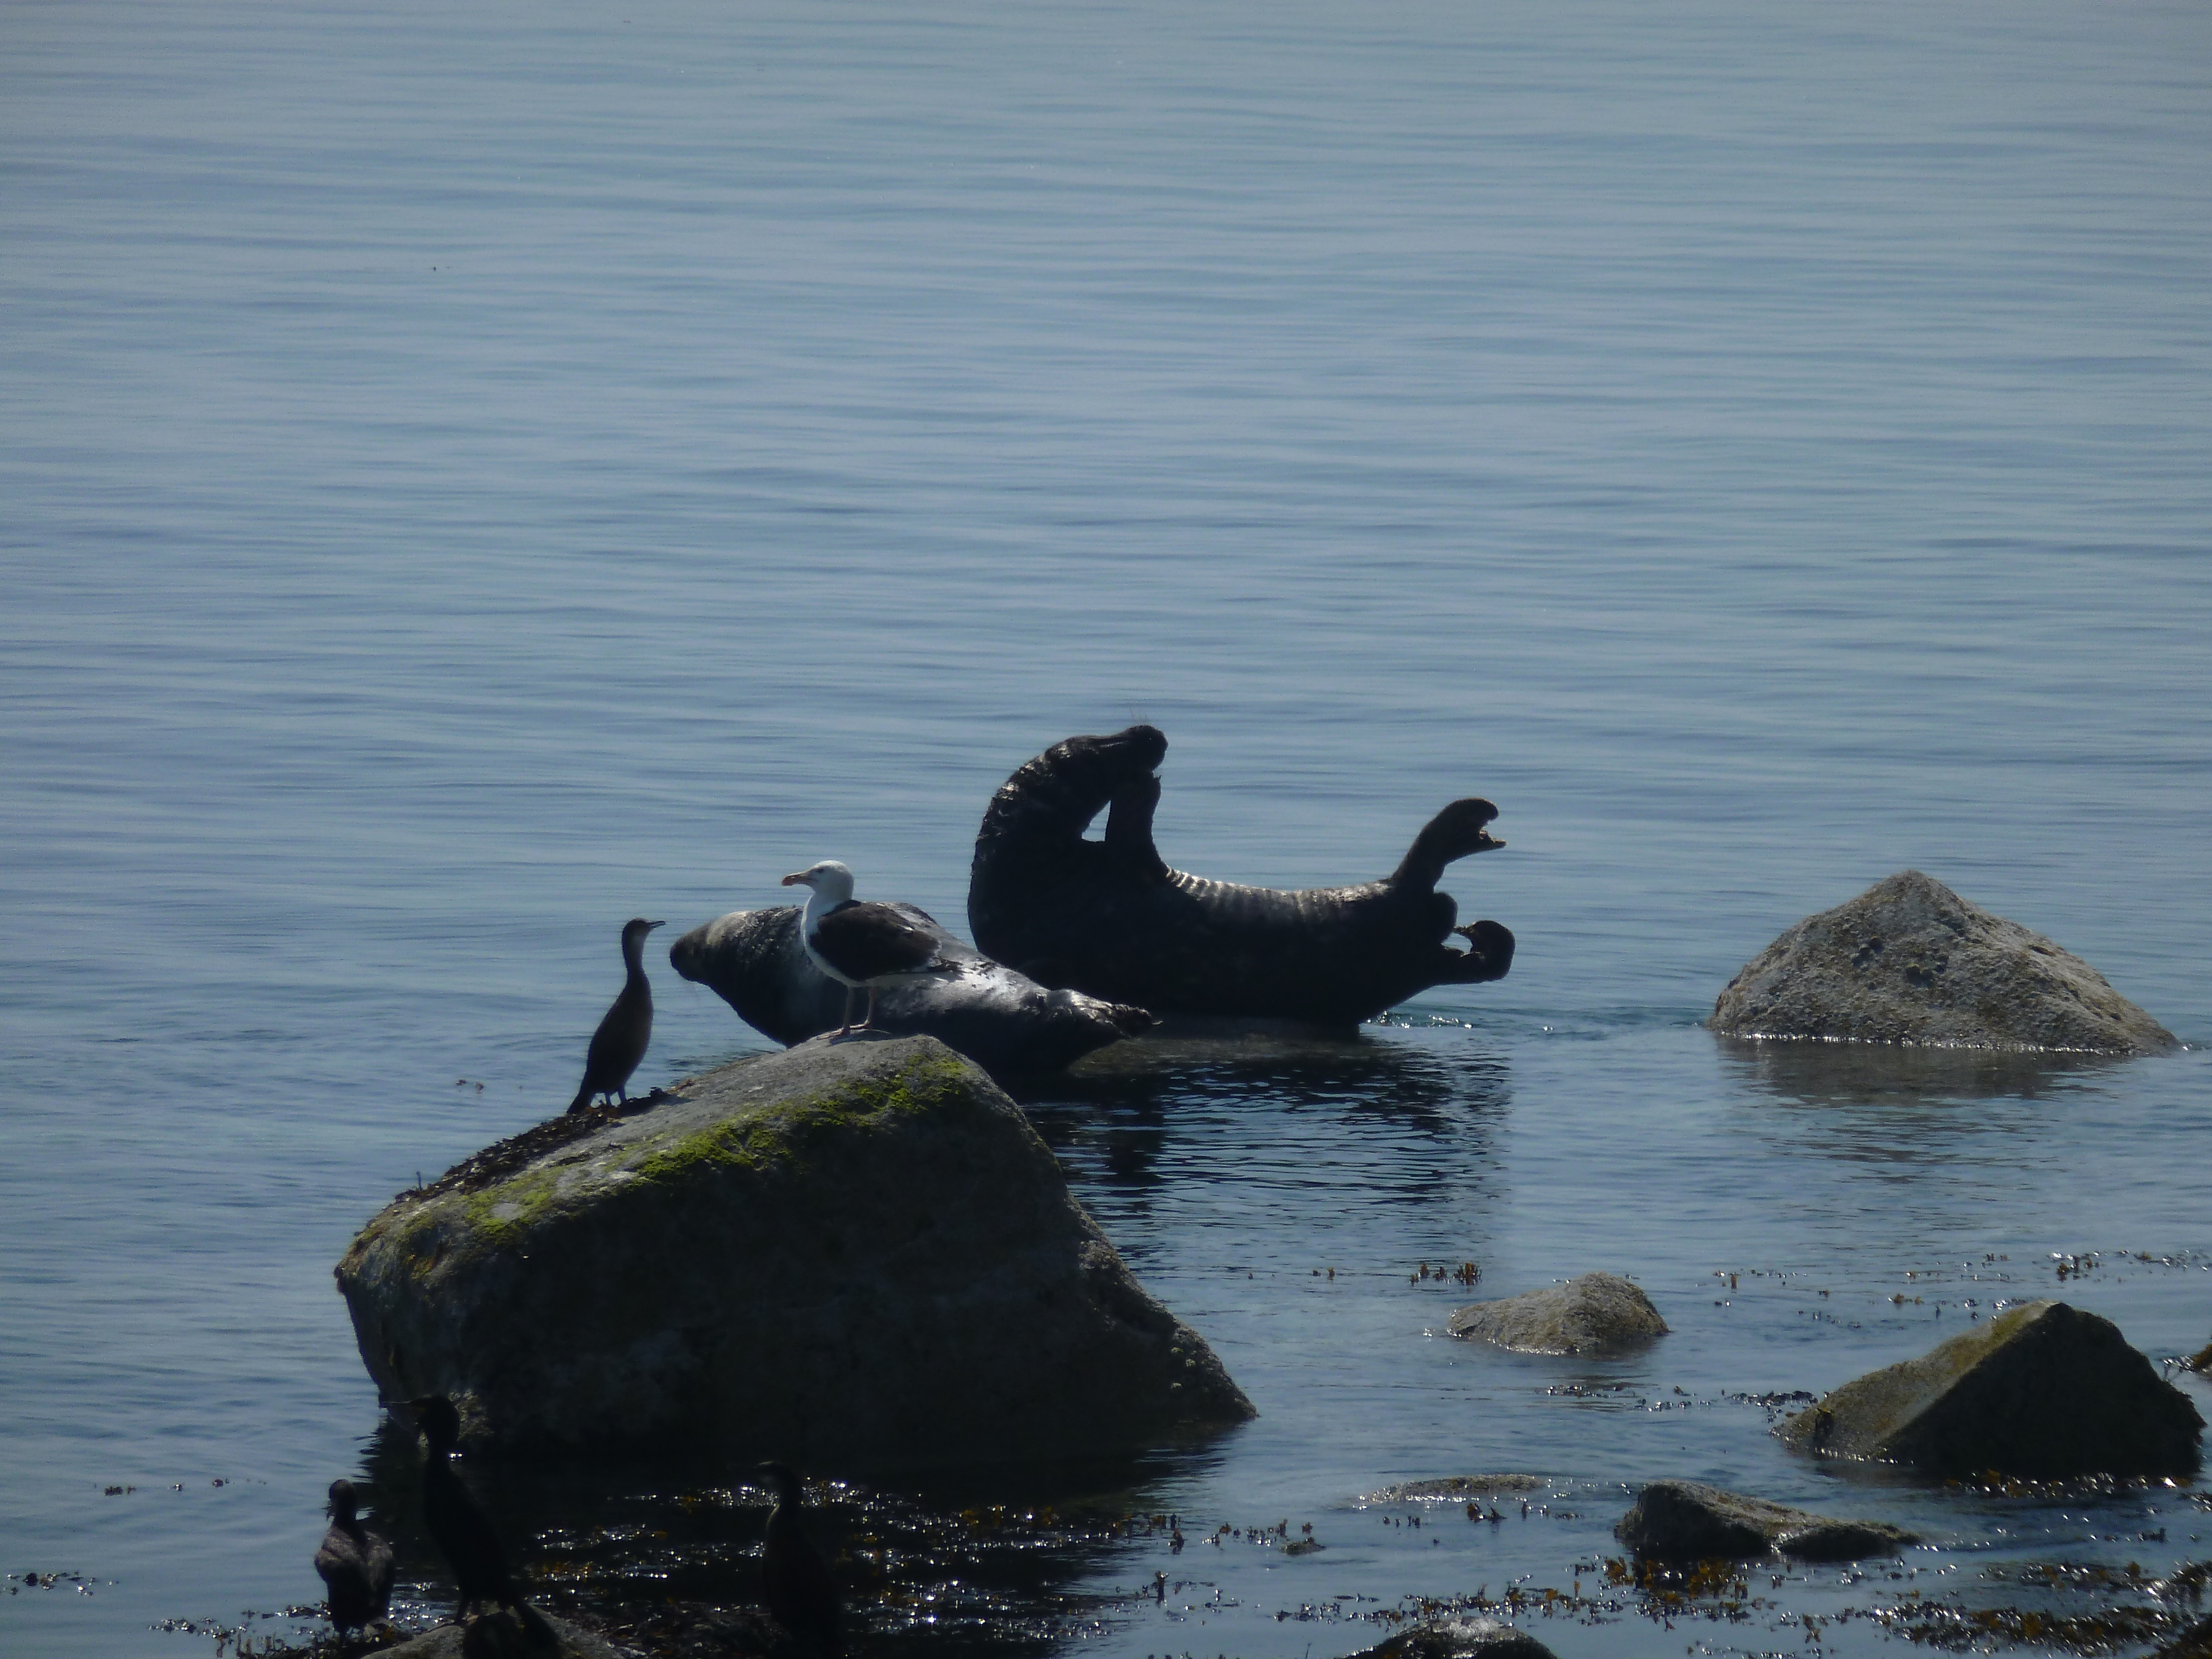 Sunbathing seals on a rock acting mermaidish